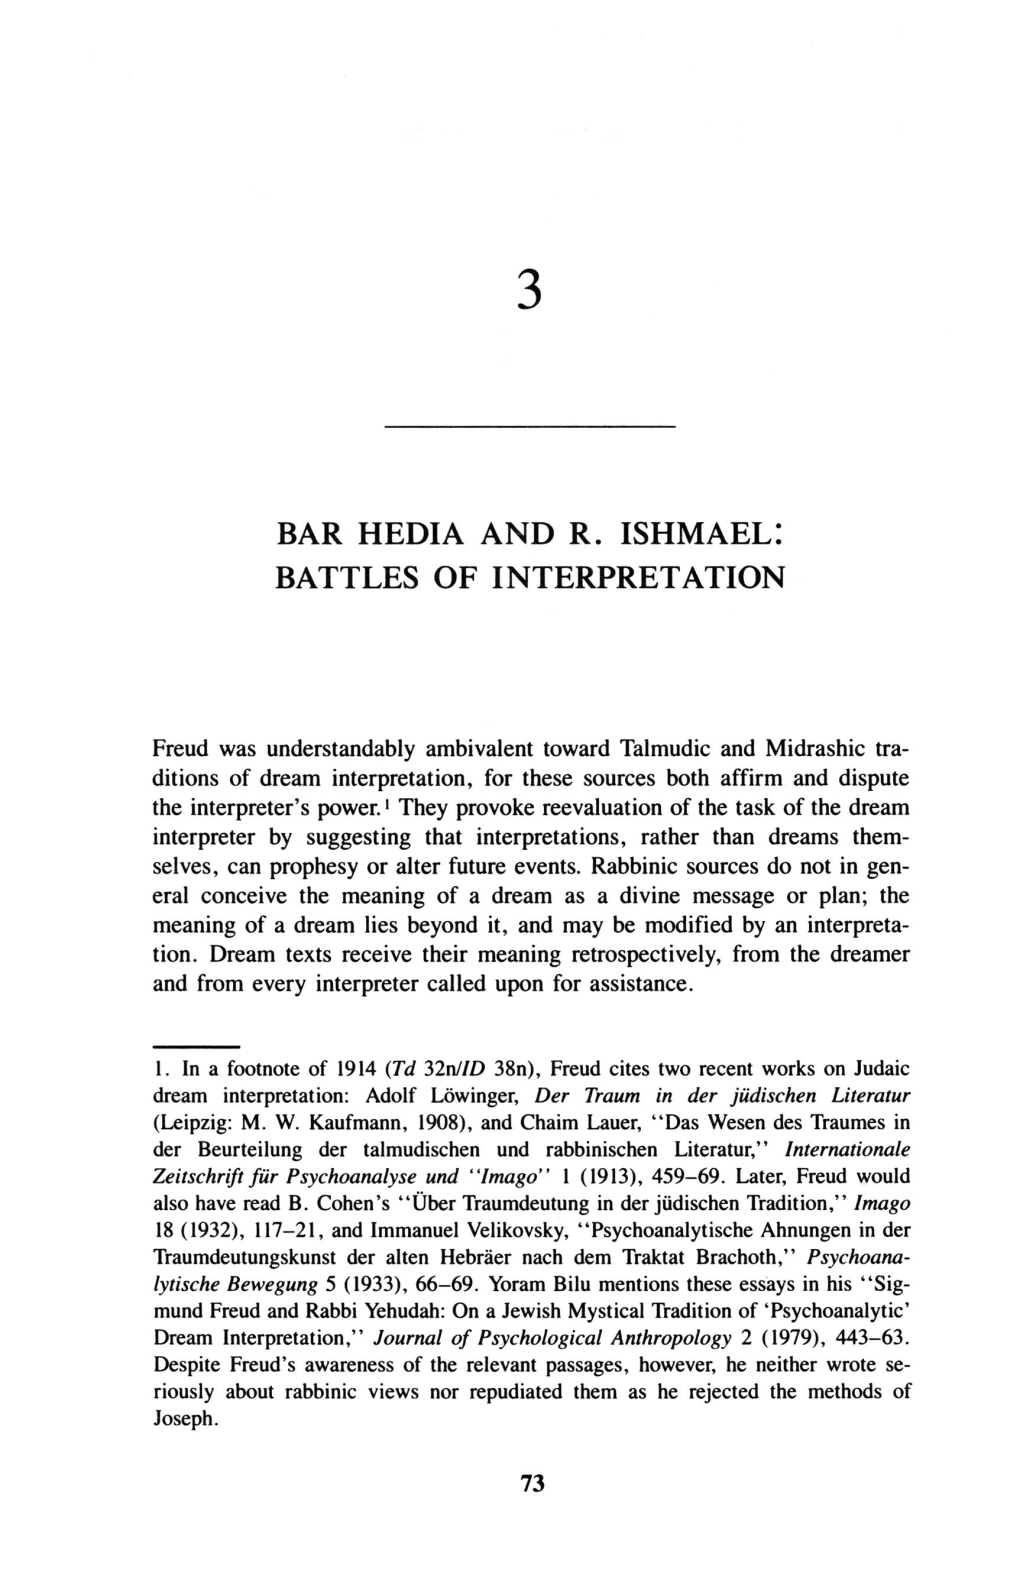 Bar Hedia and R. Ishmael: Battles of Interpretation